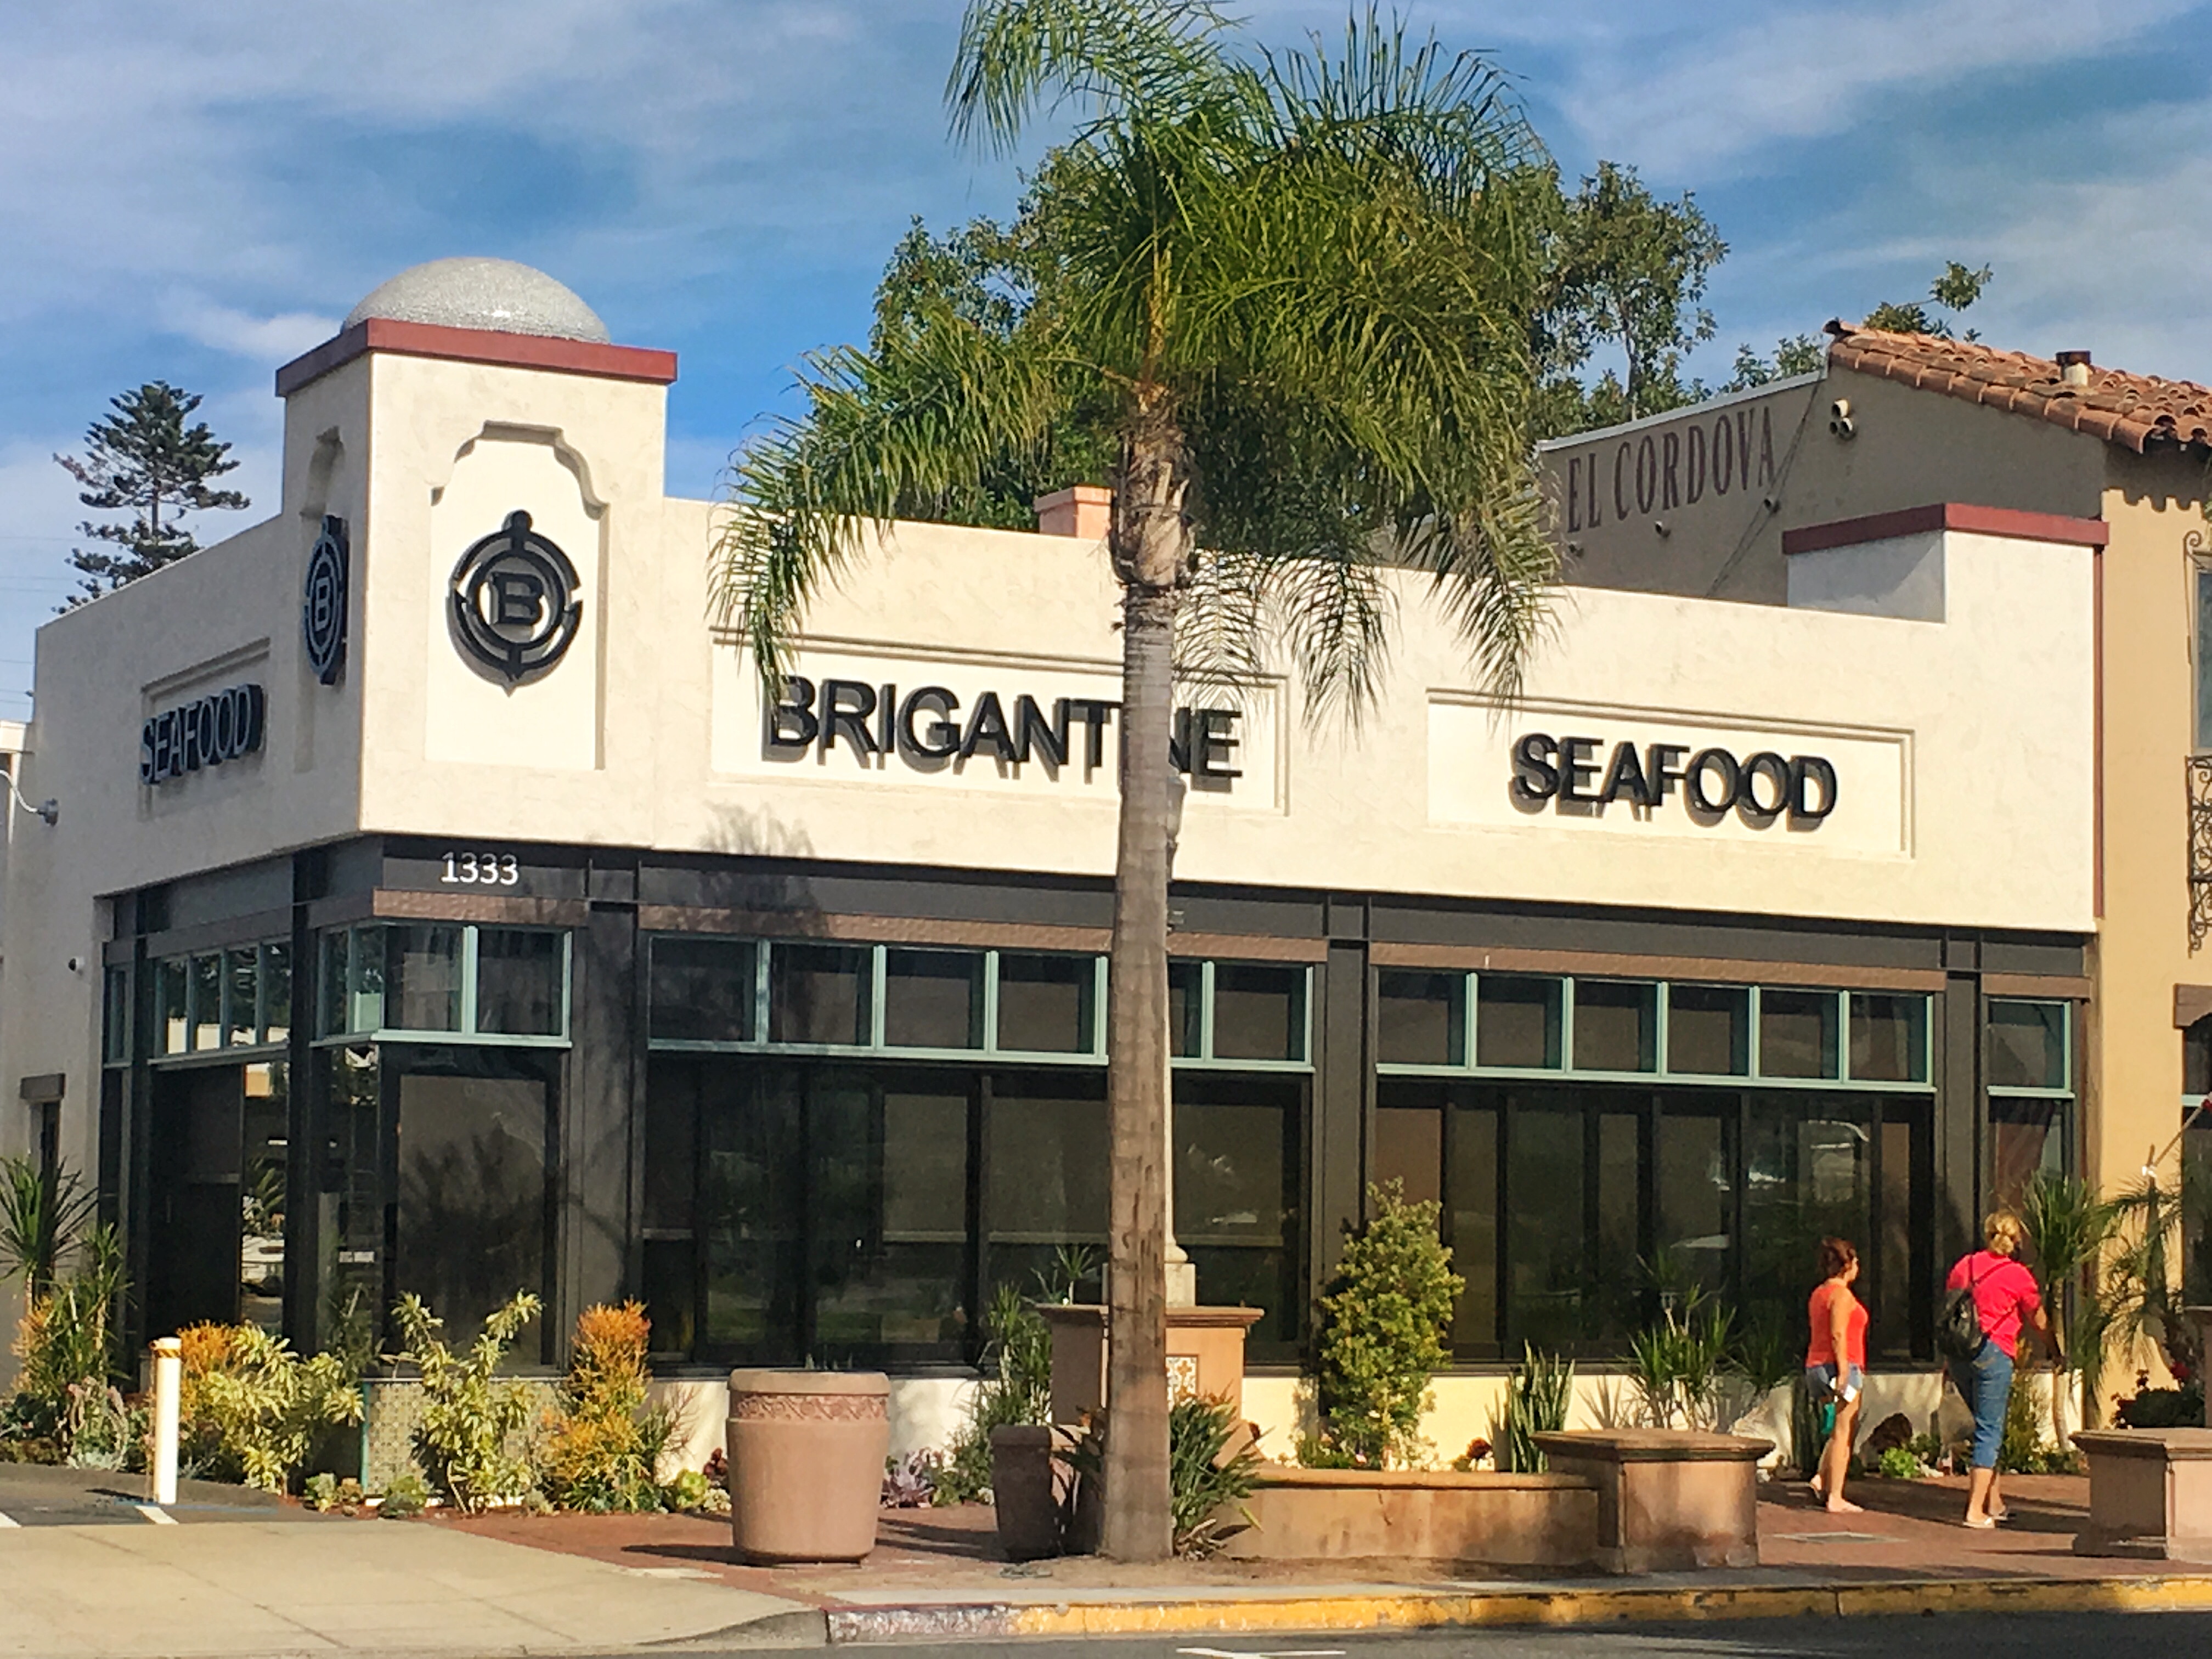 The Brigantine Seafood Restaurant